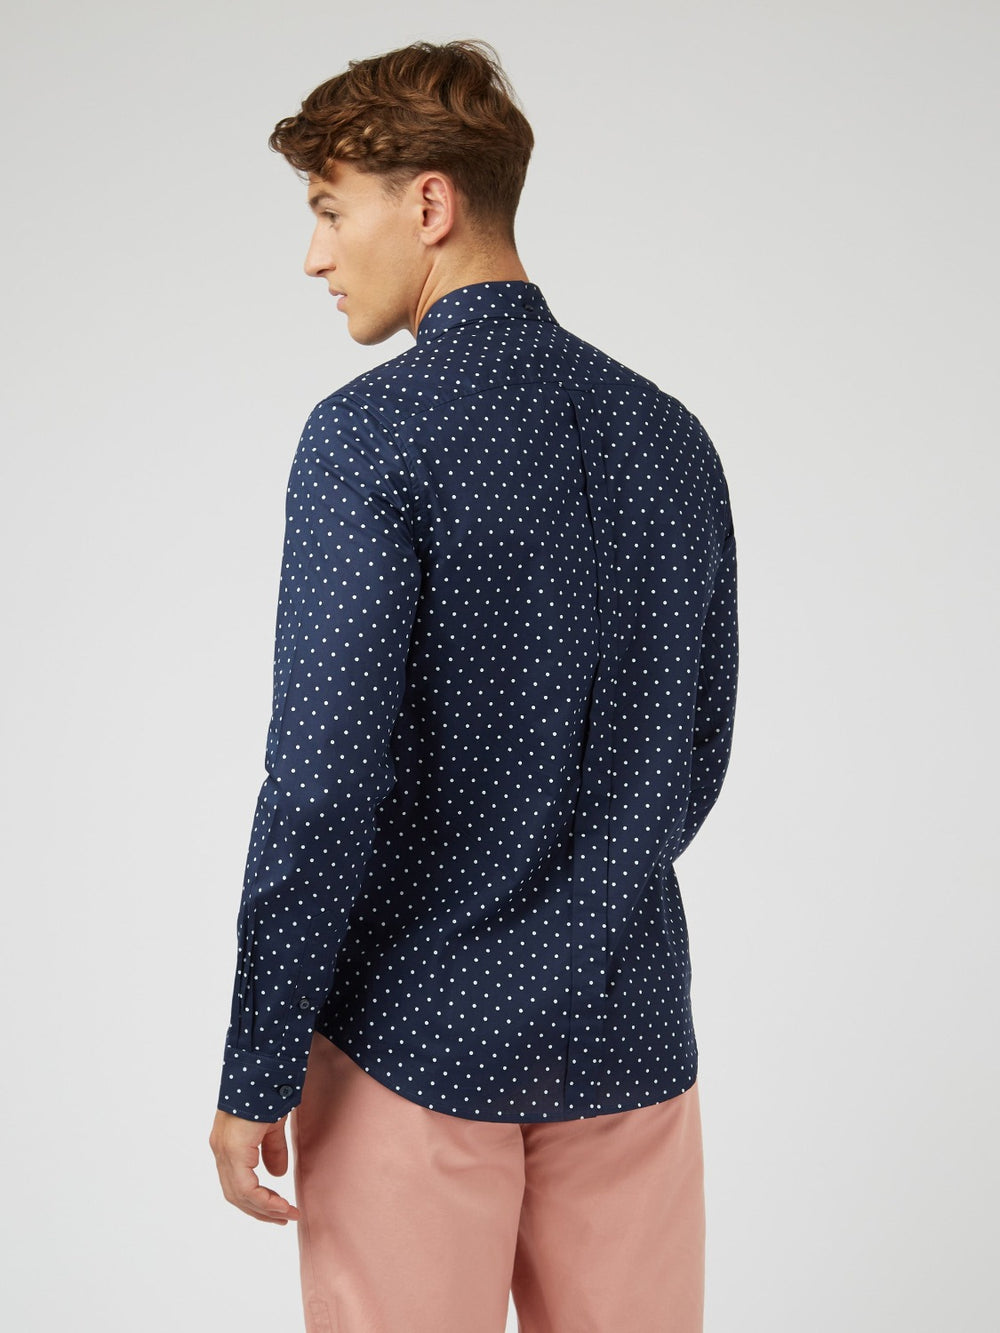 Ben Sherman Long Sleeve Classic Polka Dot Shirt Clothing, $85